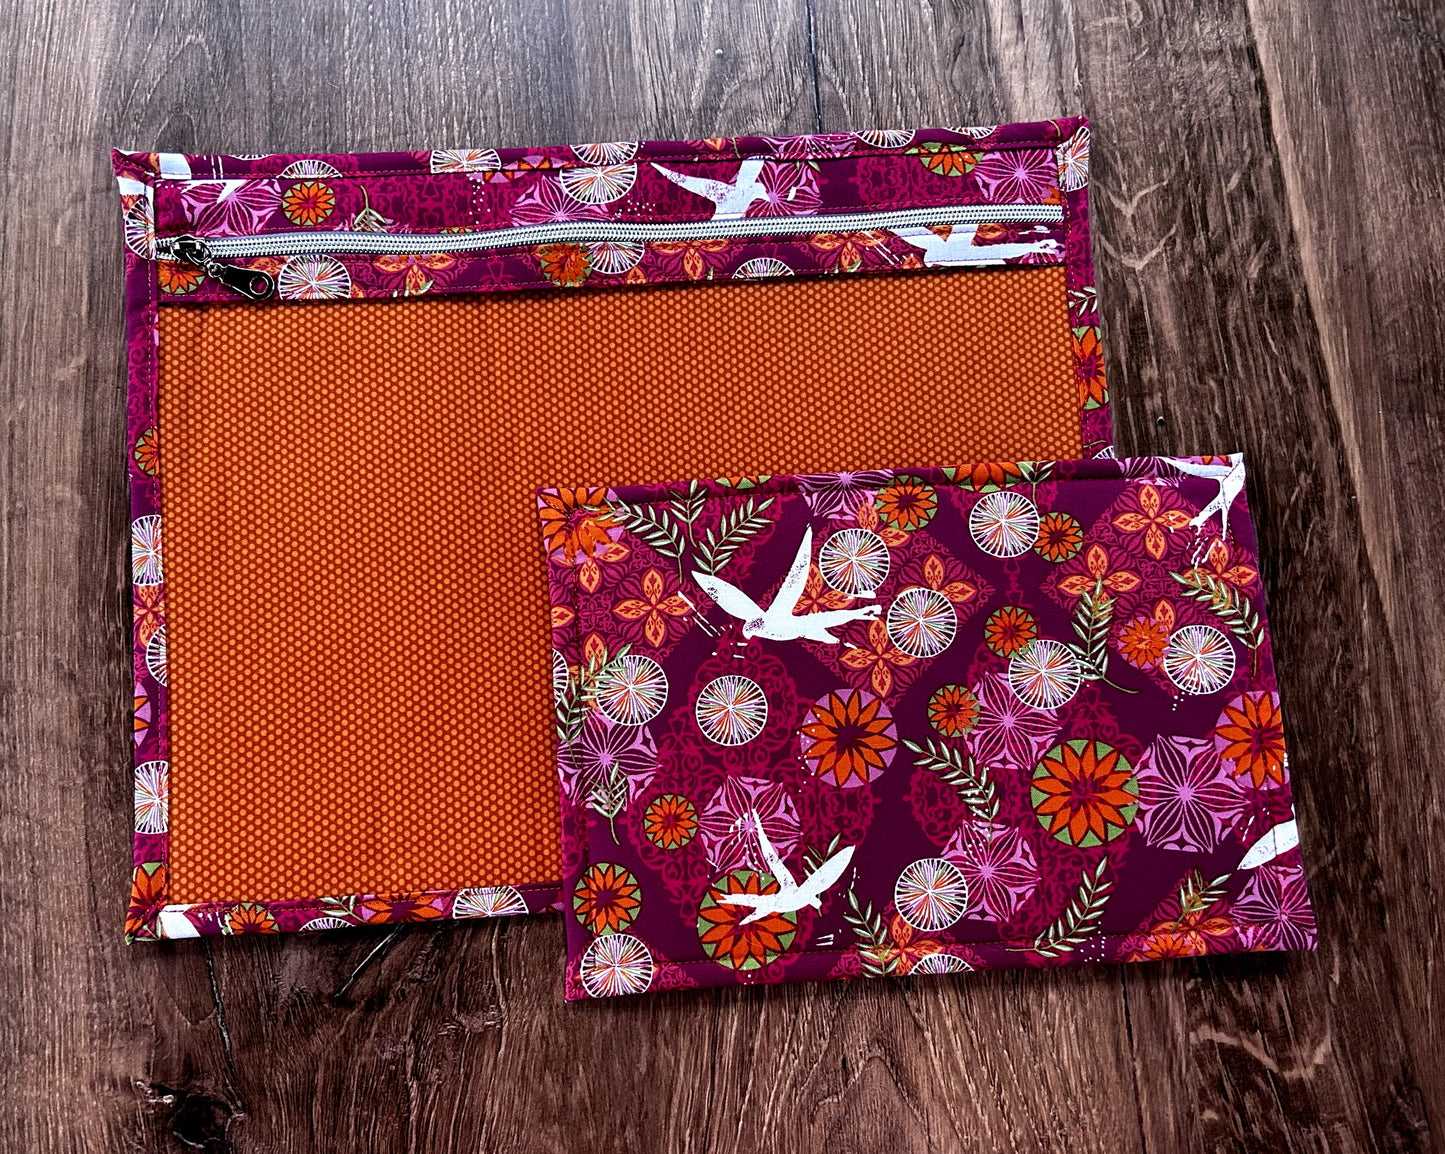 Vinyl Cross Stitch Project Bag - Embroidery bag - Project Bag - Knitting Crochet Bag - Storage - Organizer - Bird Project Bag - Notion